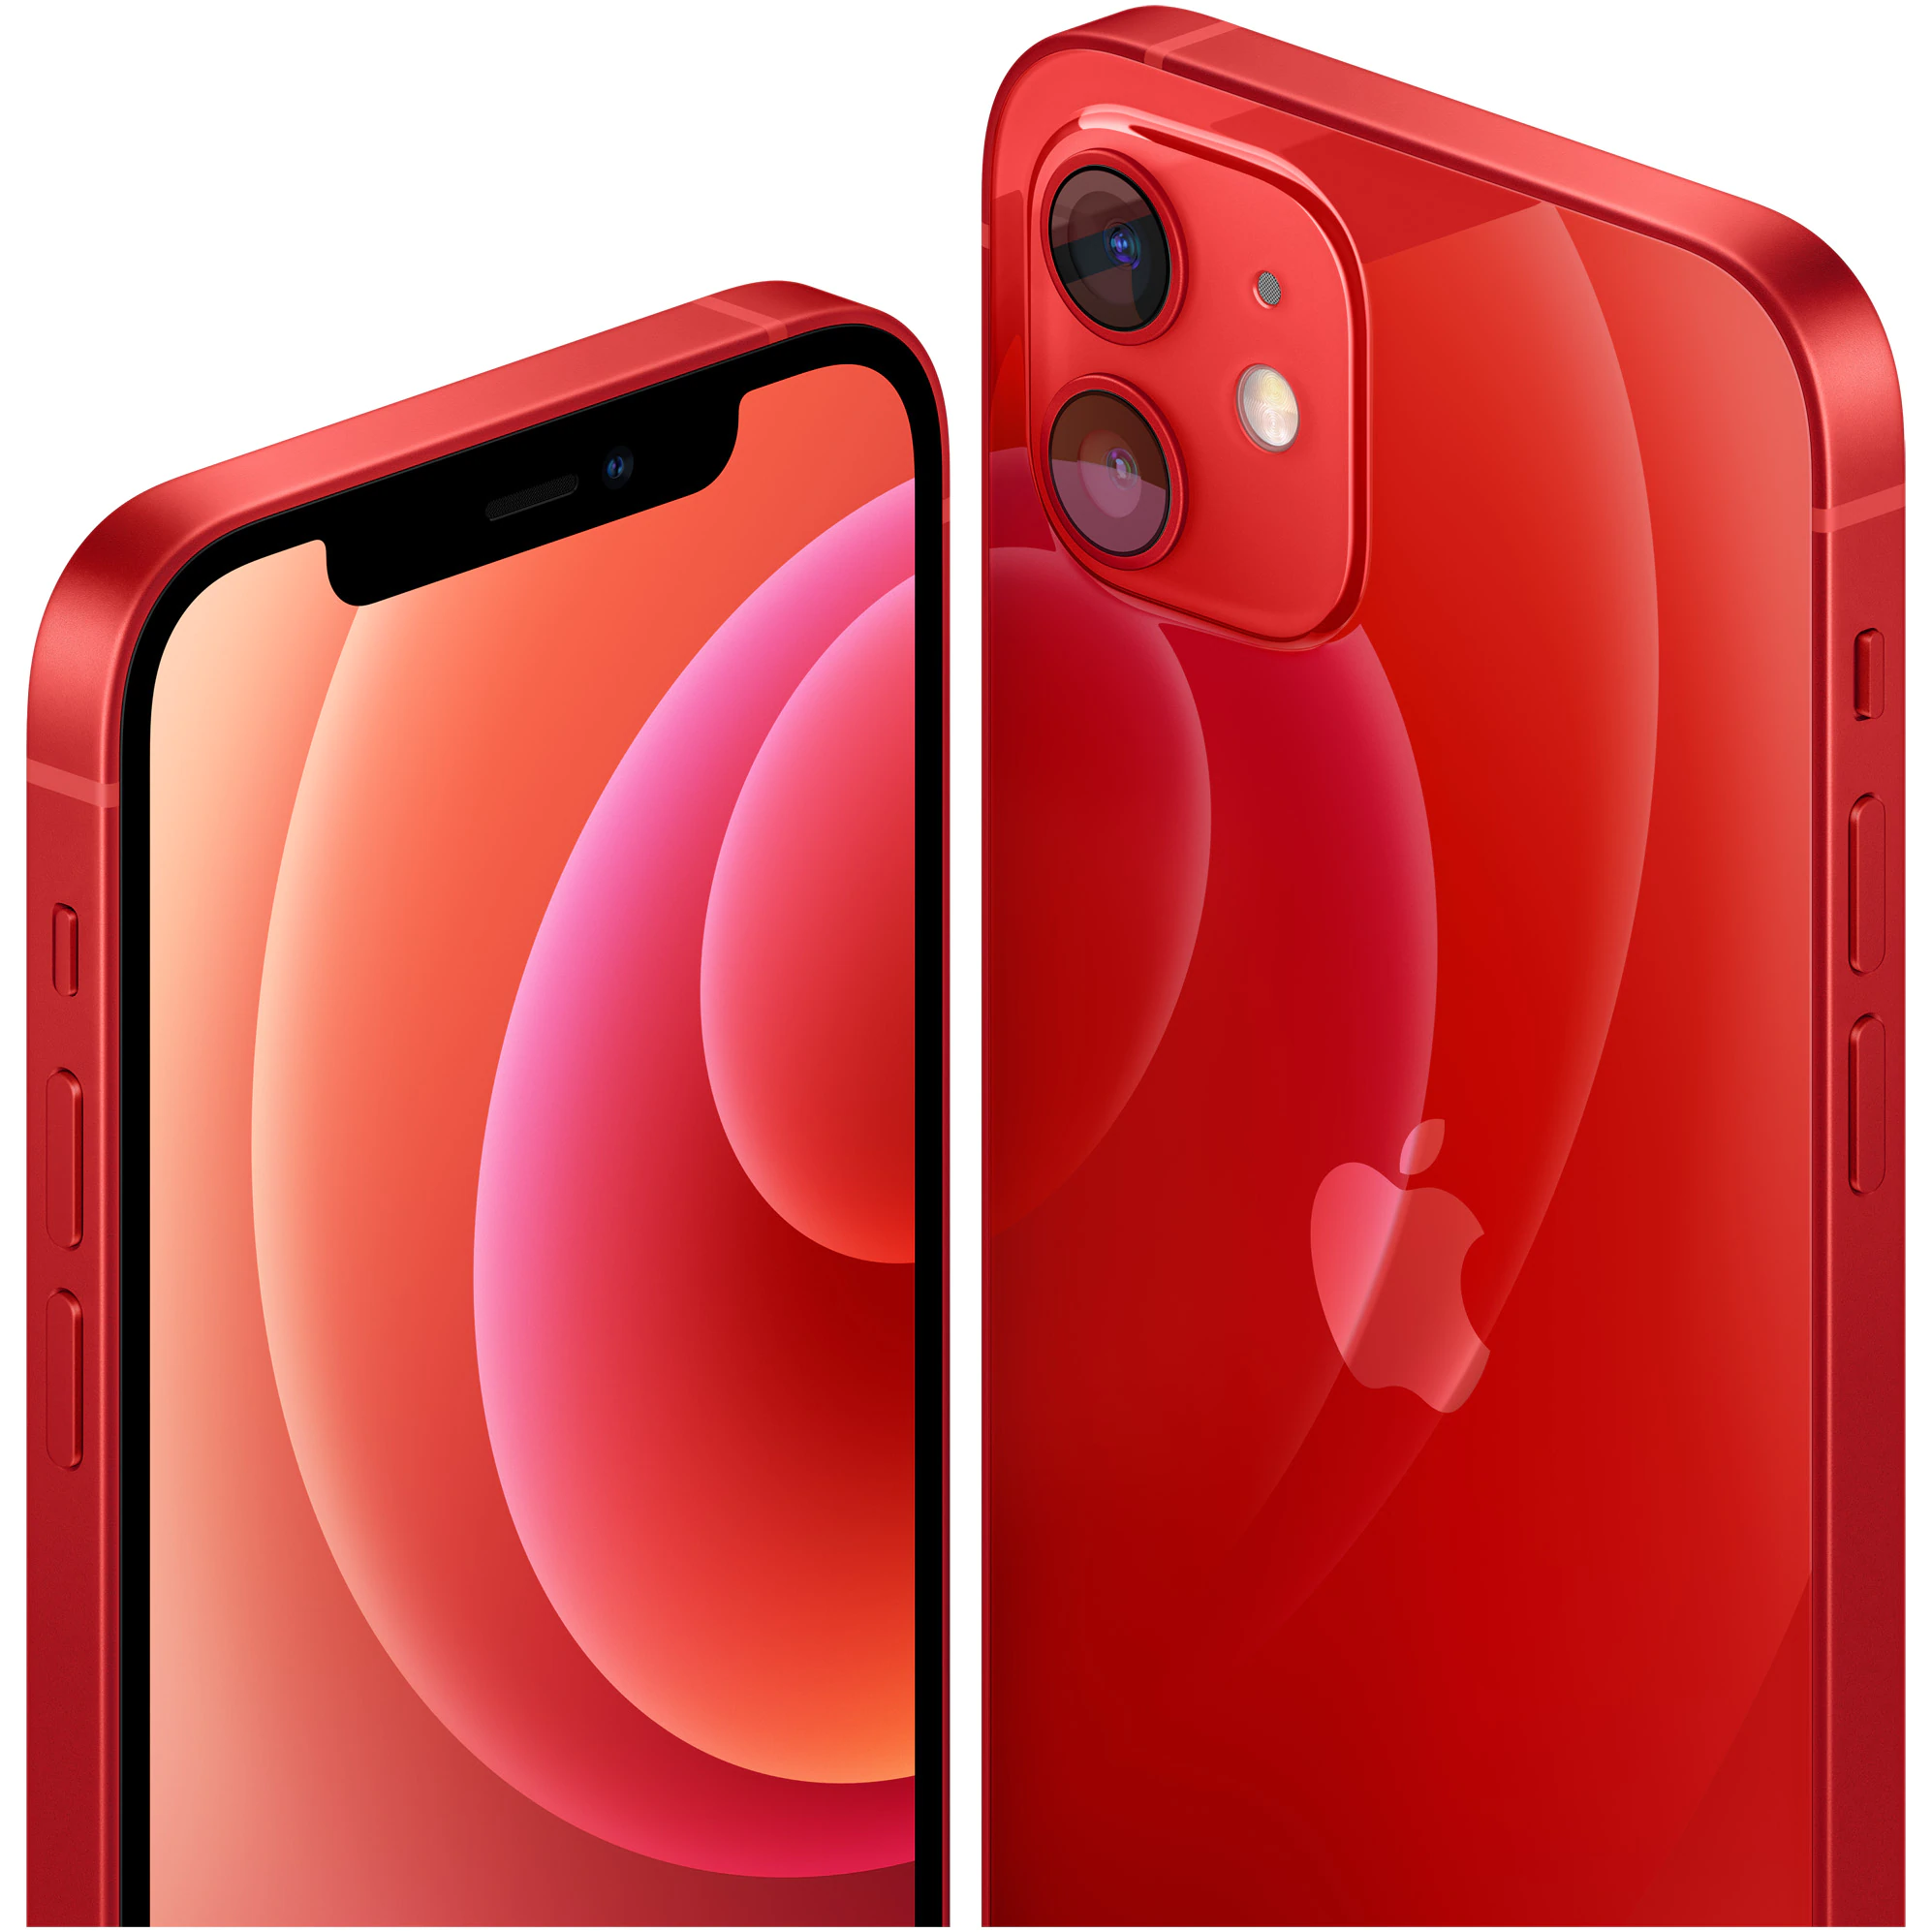 Telefon mobil Apple iPhone 12 Red, Rosu, 128GB, Dual eSim, Super retina XDR [0]